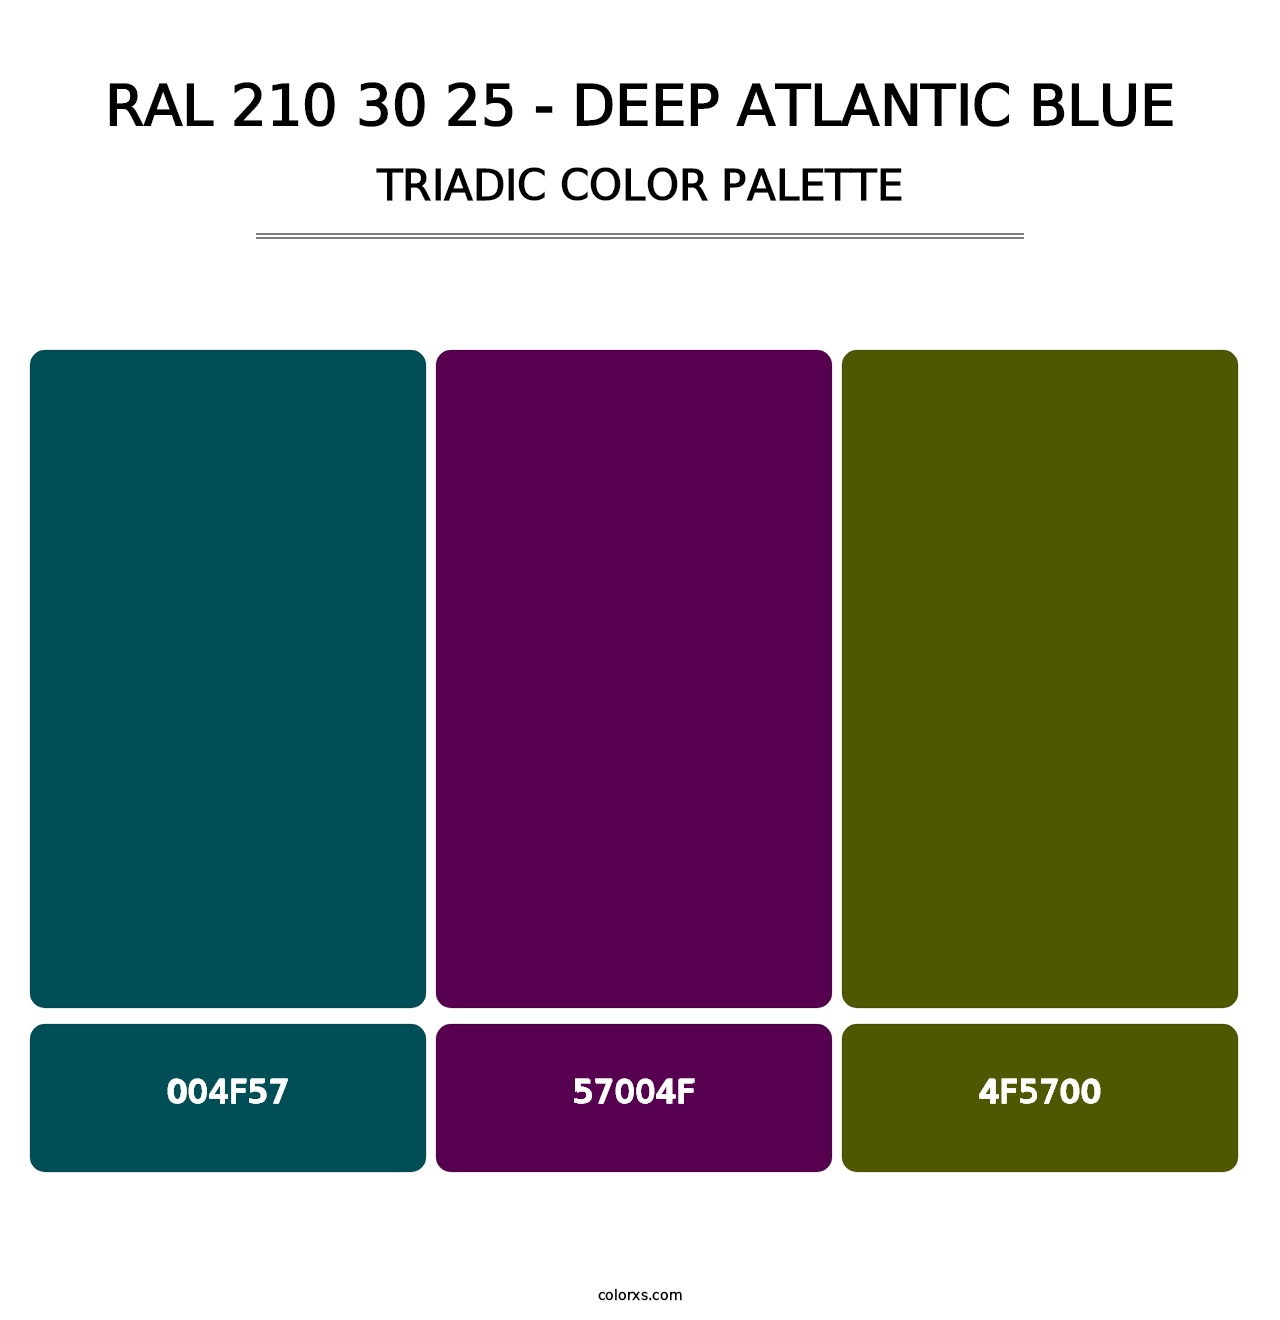 RAL 210 30 25 - Deep Atlantic Blue - Triadic Color Palette